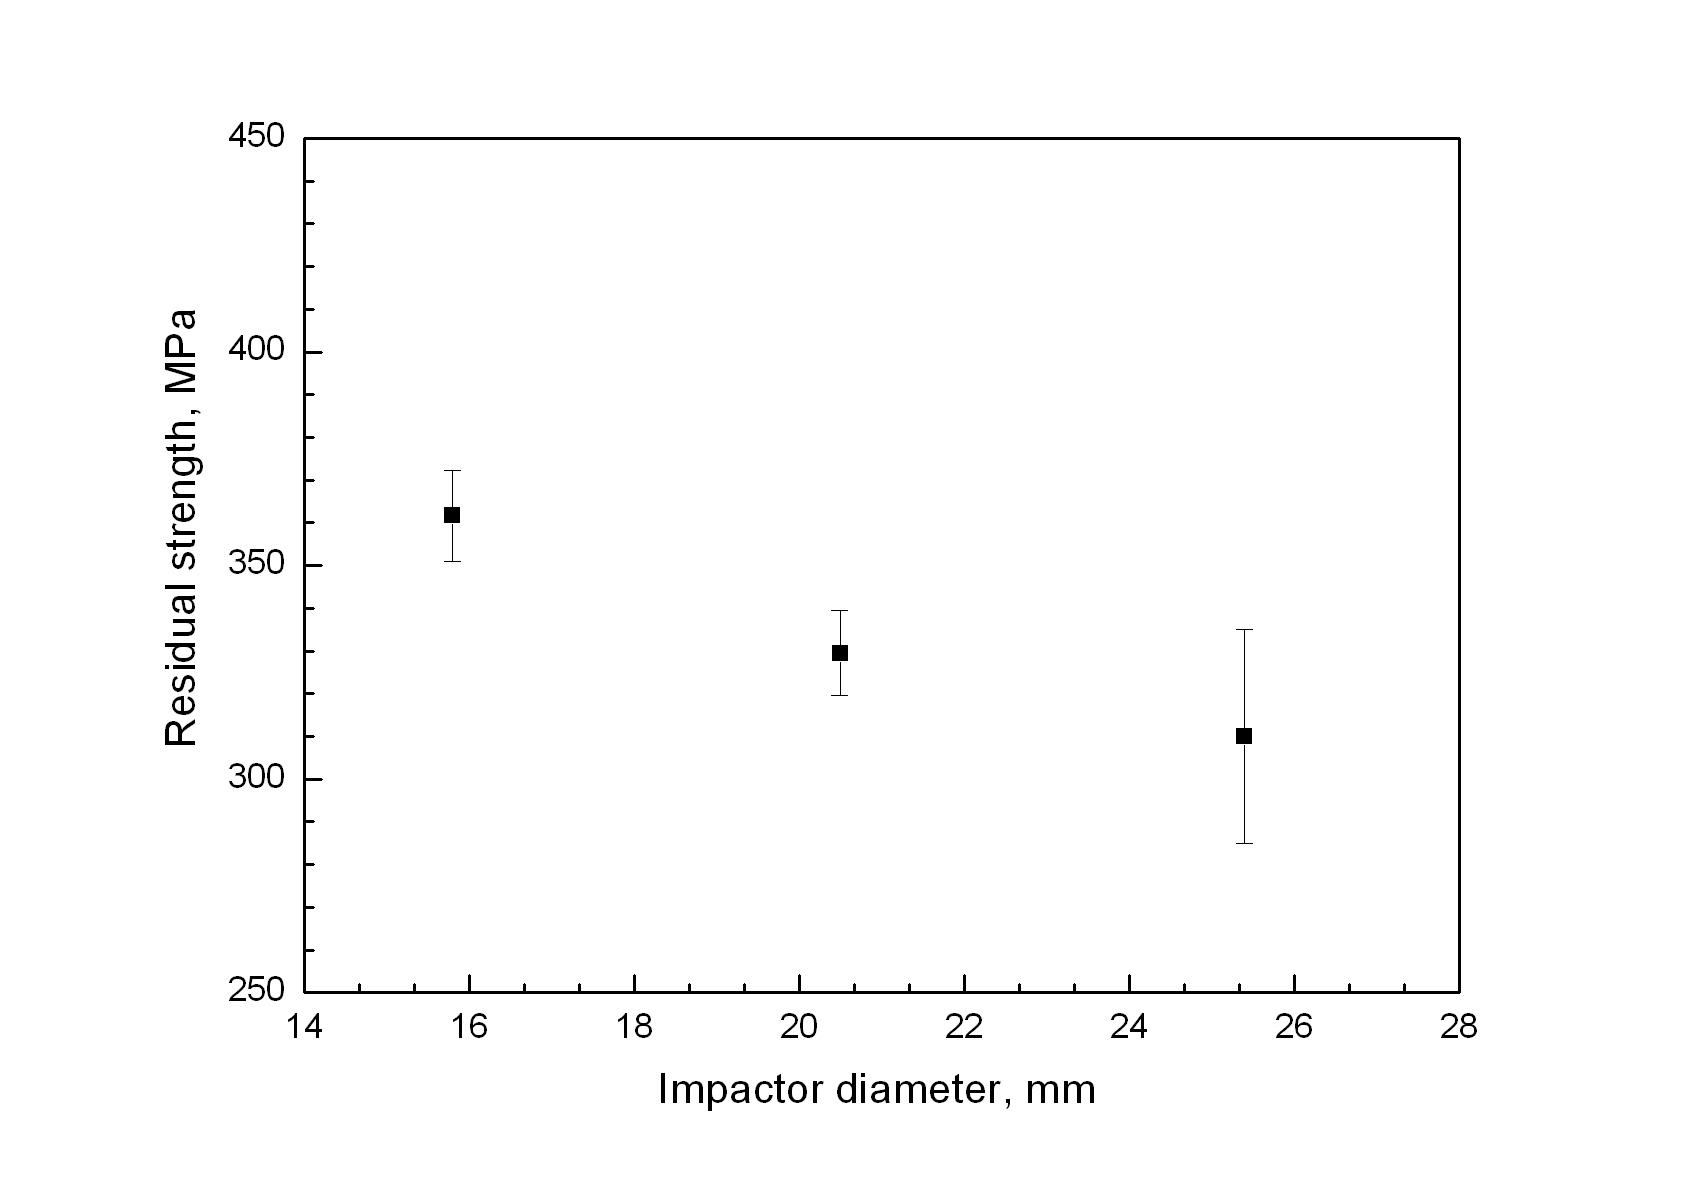 Strength reduction behavior according to impactor diameter